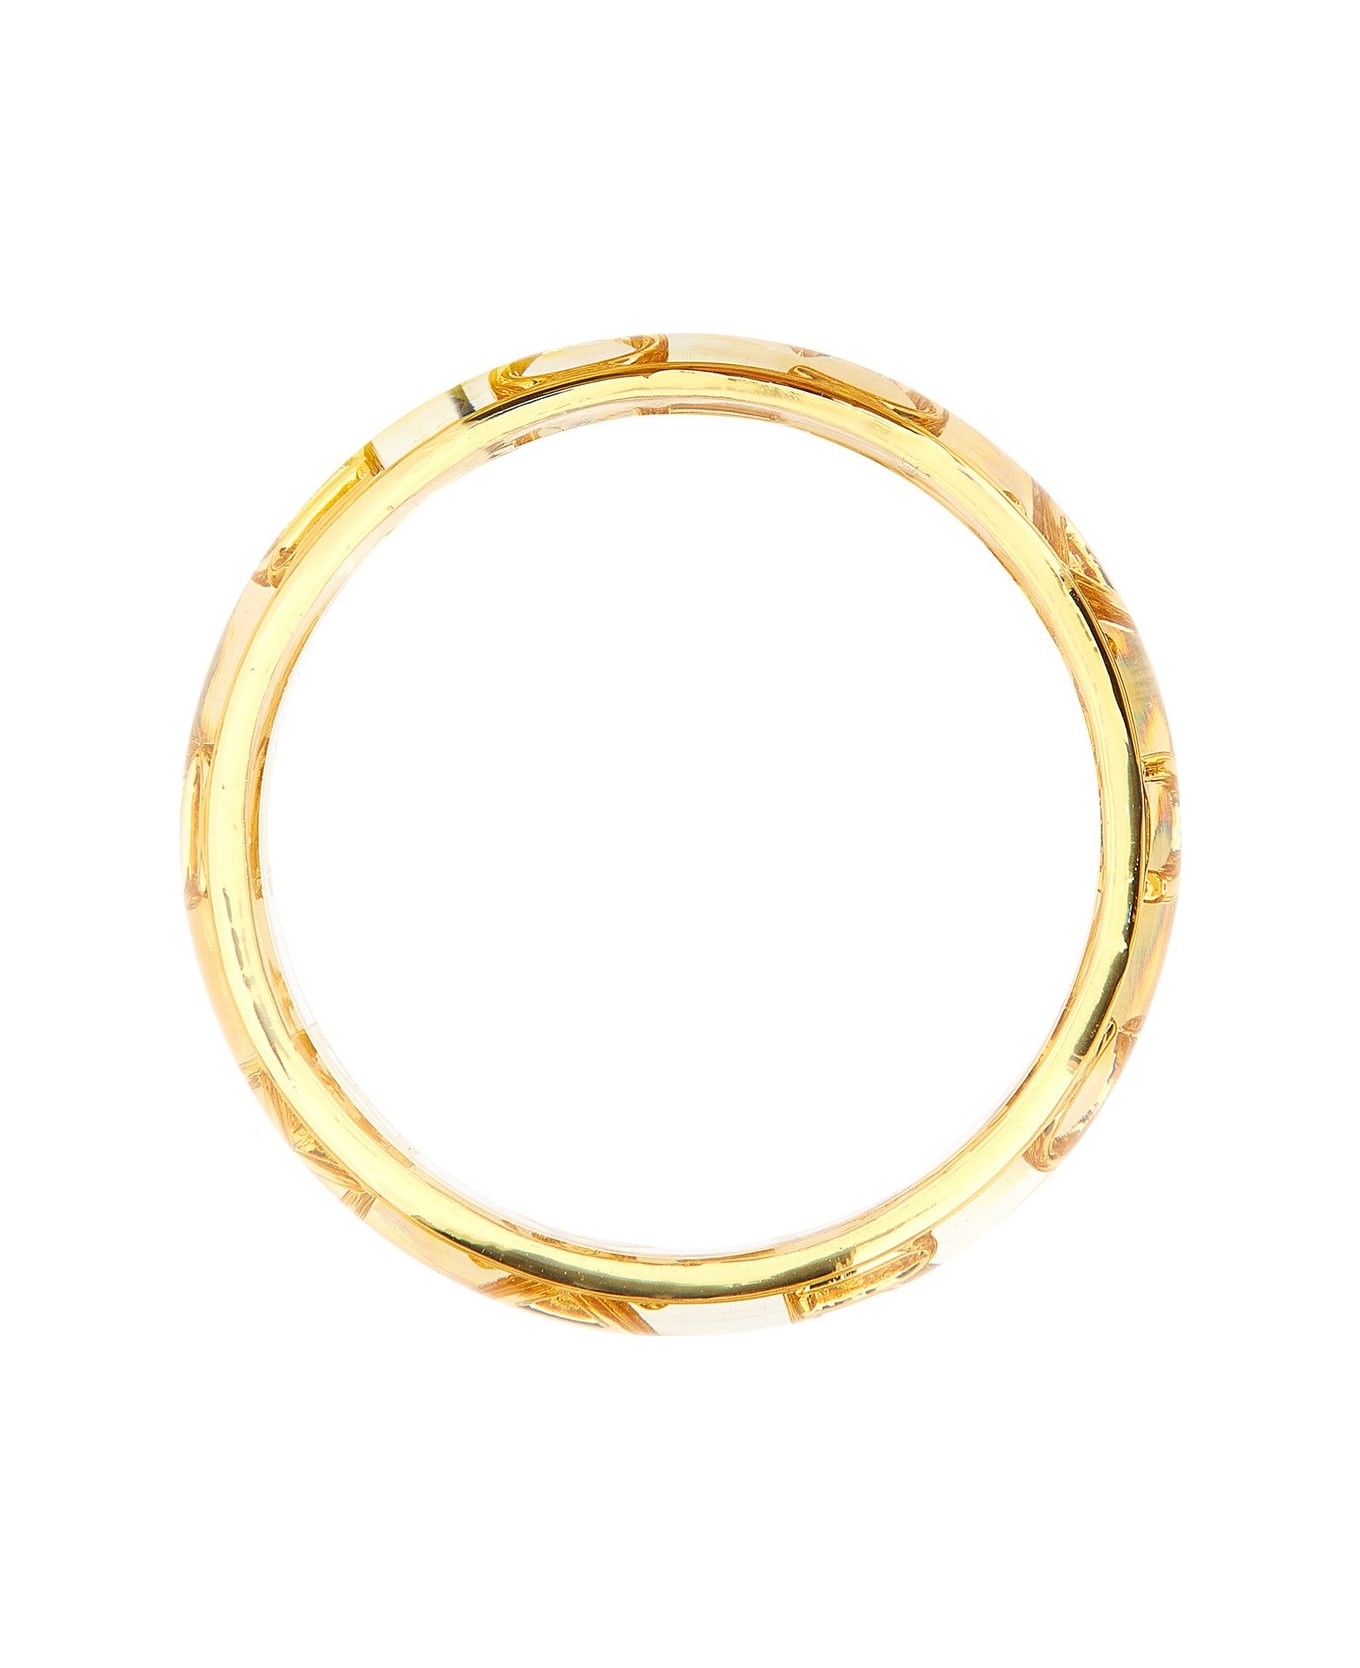 Marc Jacobs Monogram Bangle Bracelet - Clear Gold ブレスレット